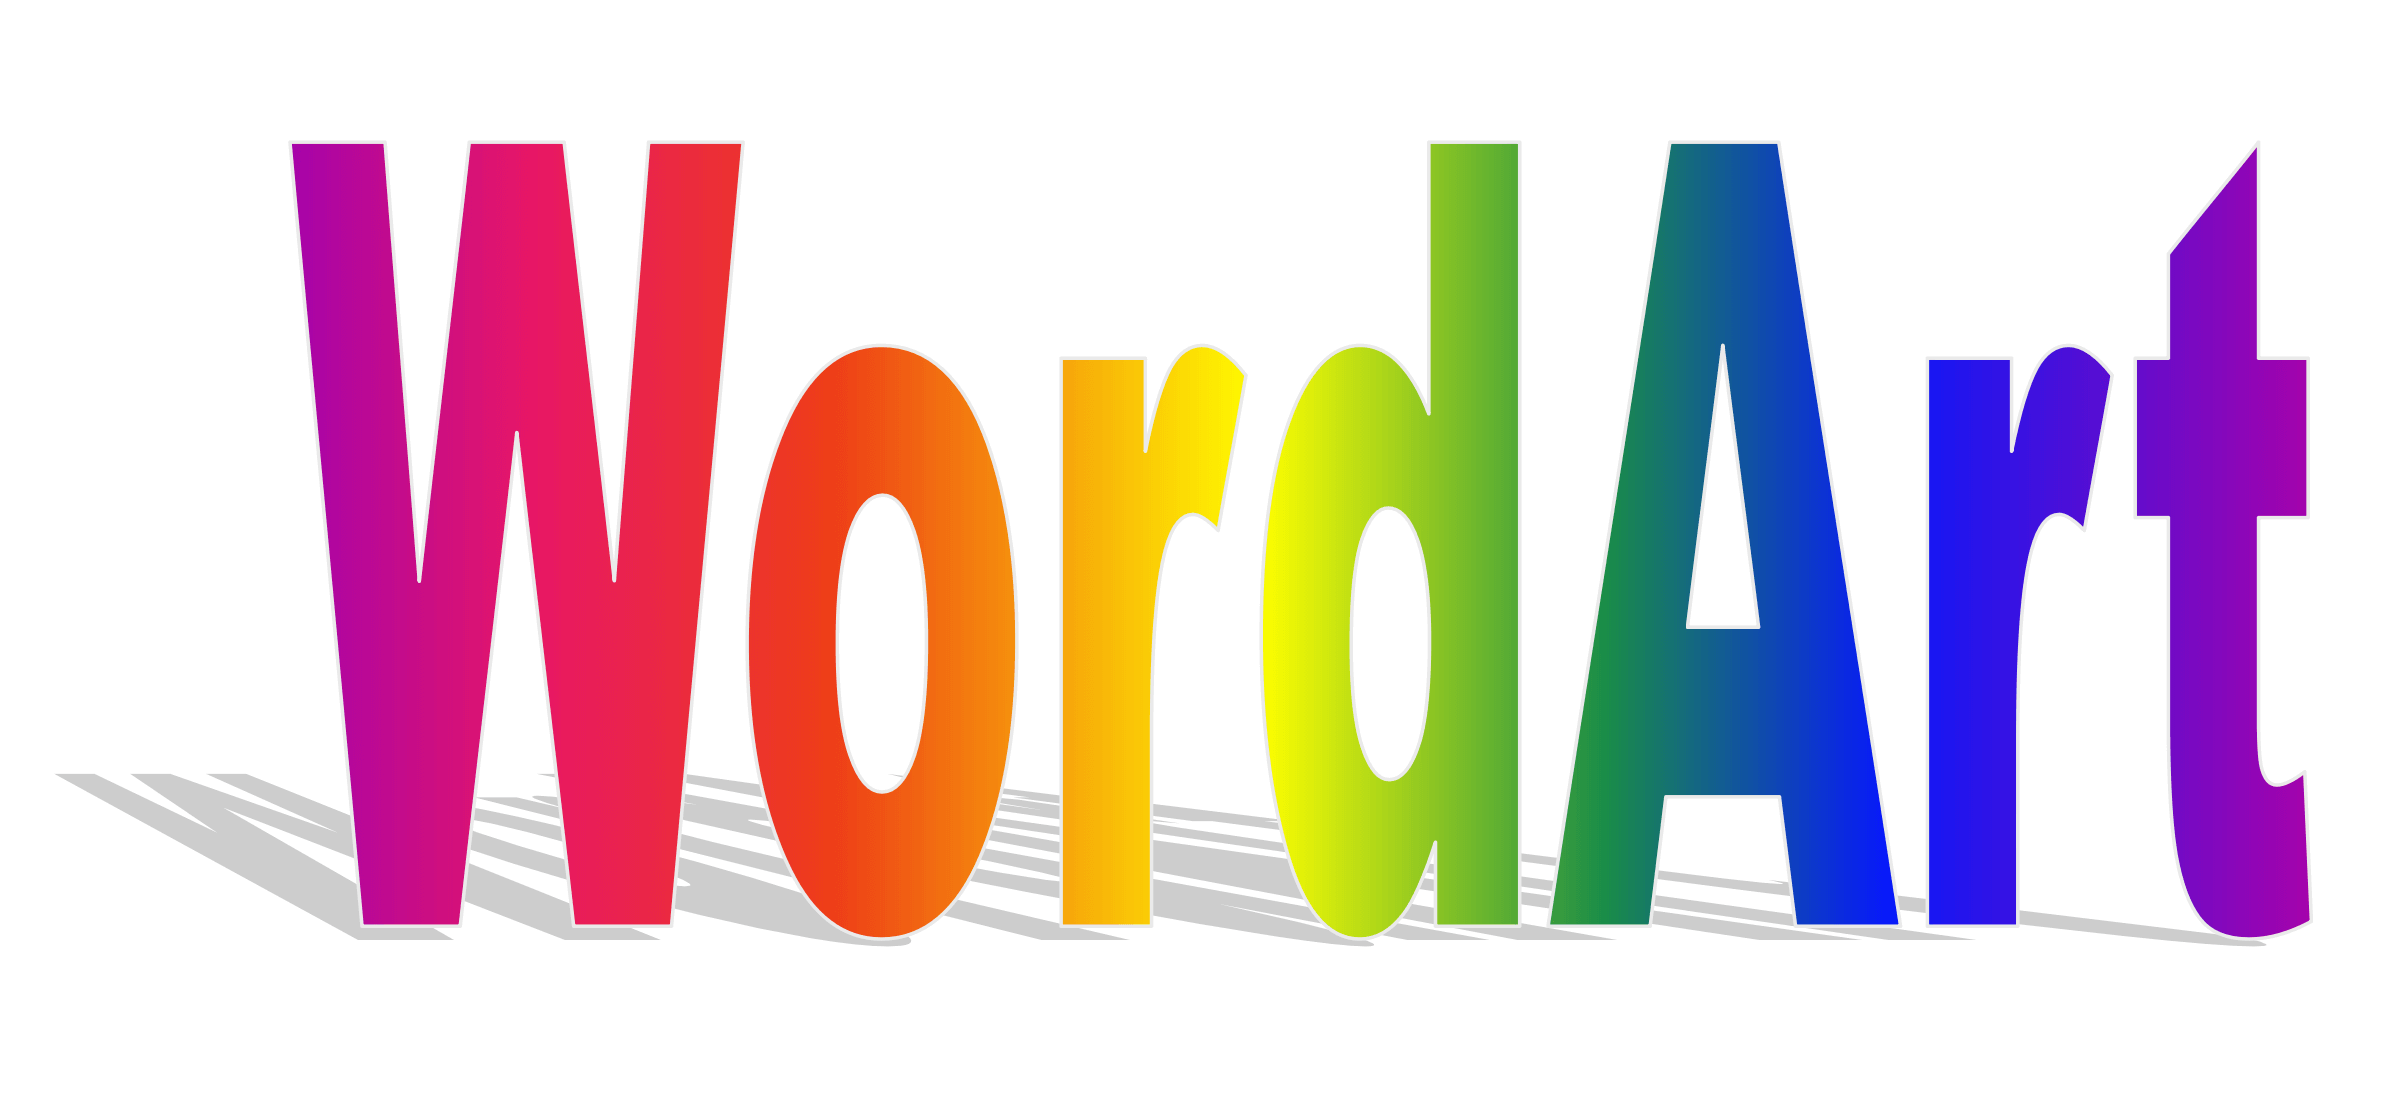 MS Wordart screenshot, the word 'WordArt' written in rainbow gradient text with a grey 3D shadow.